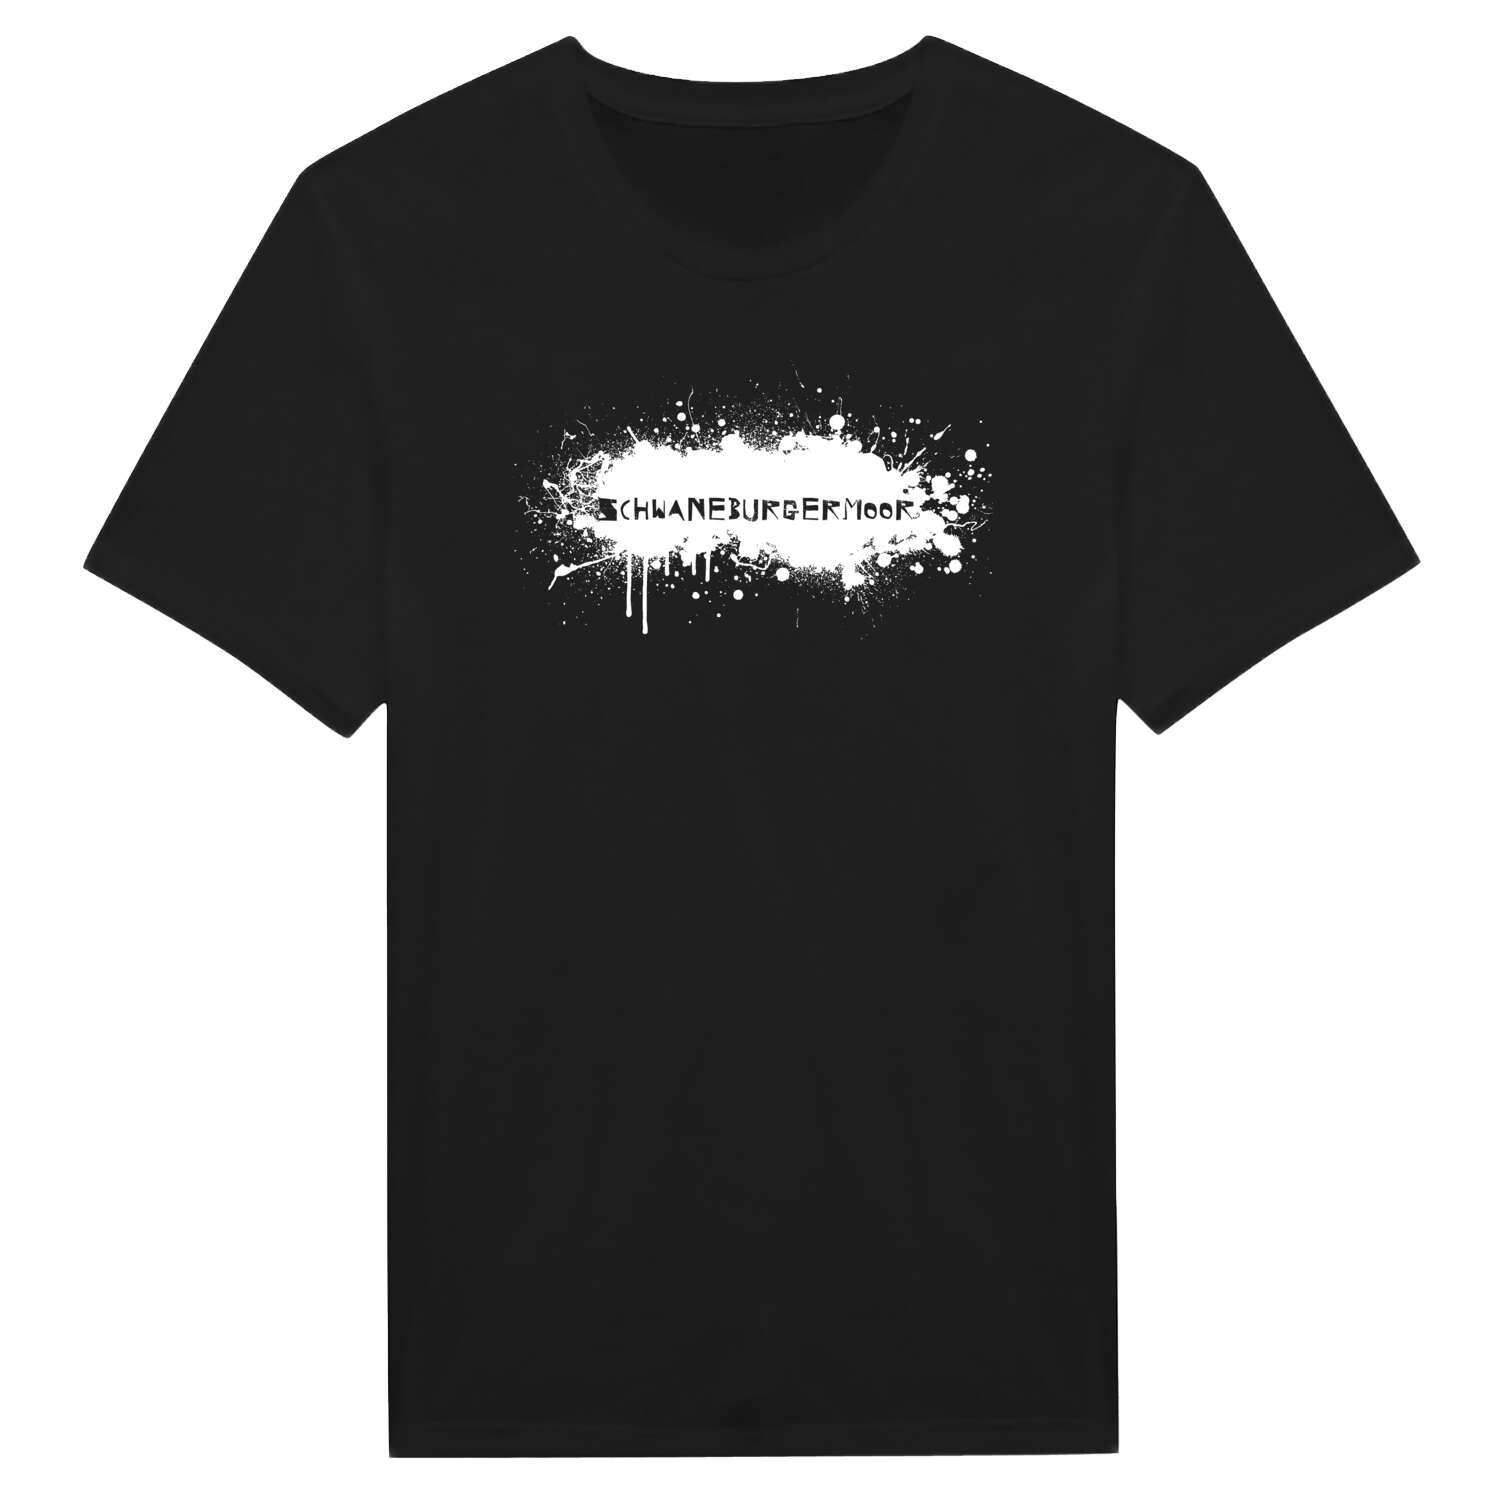 Schwaneburgermoor T-Shirt »Paint Splash Punk«